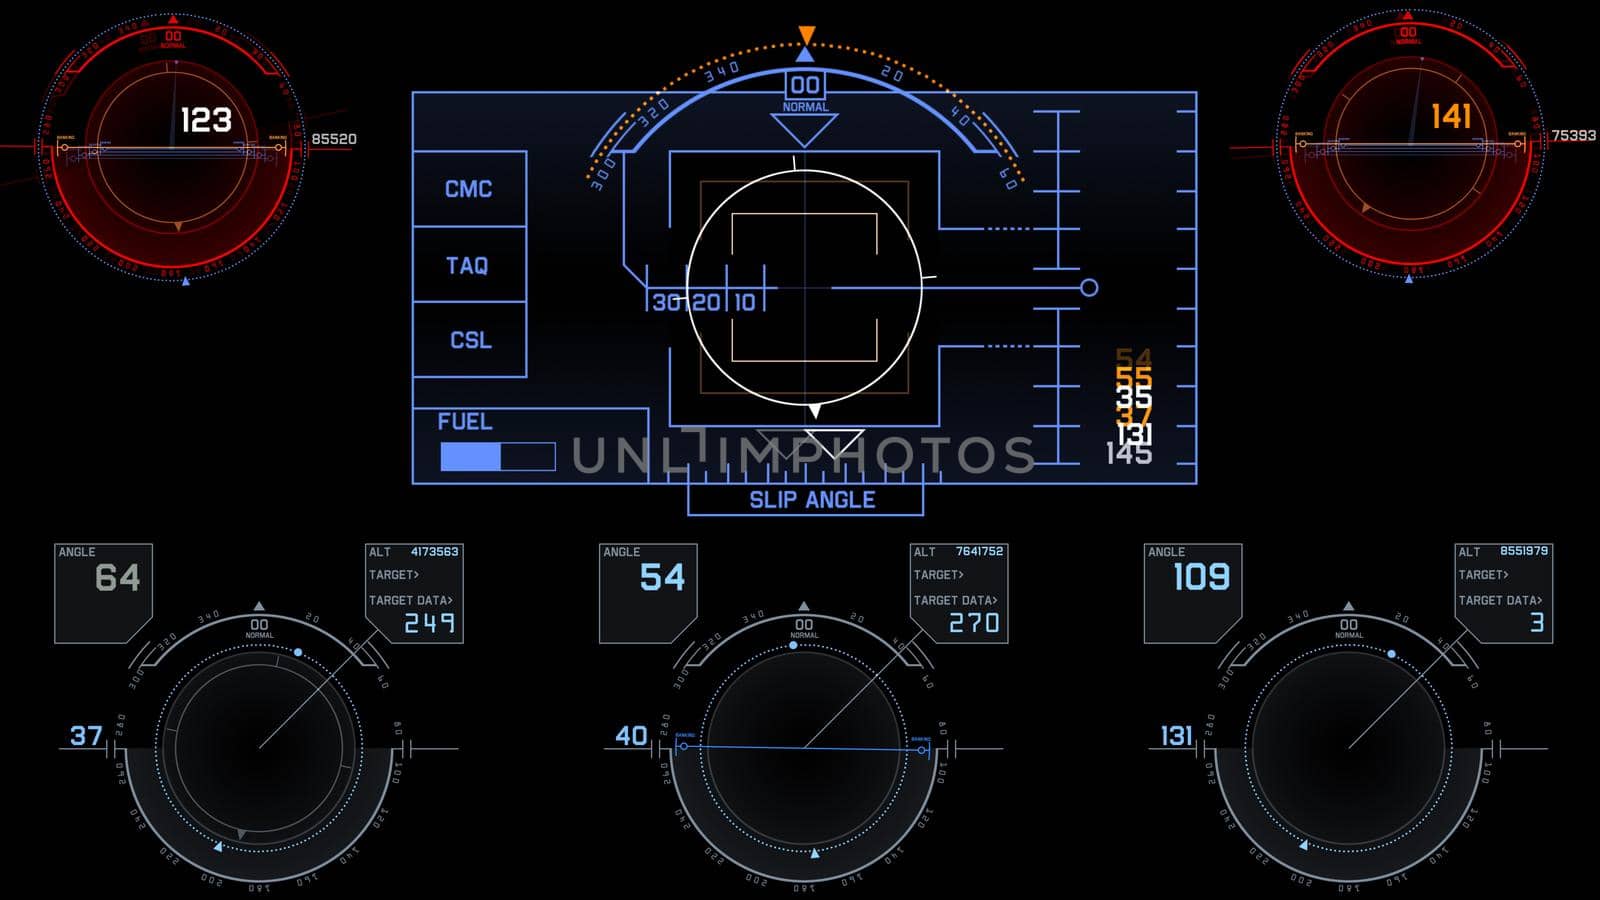 flight control panel instrument navigation by alex_nako